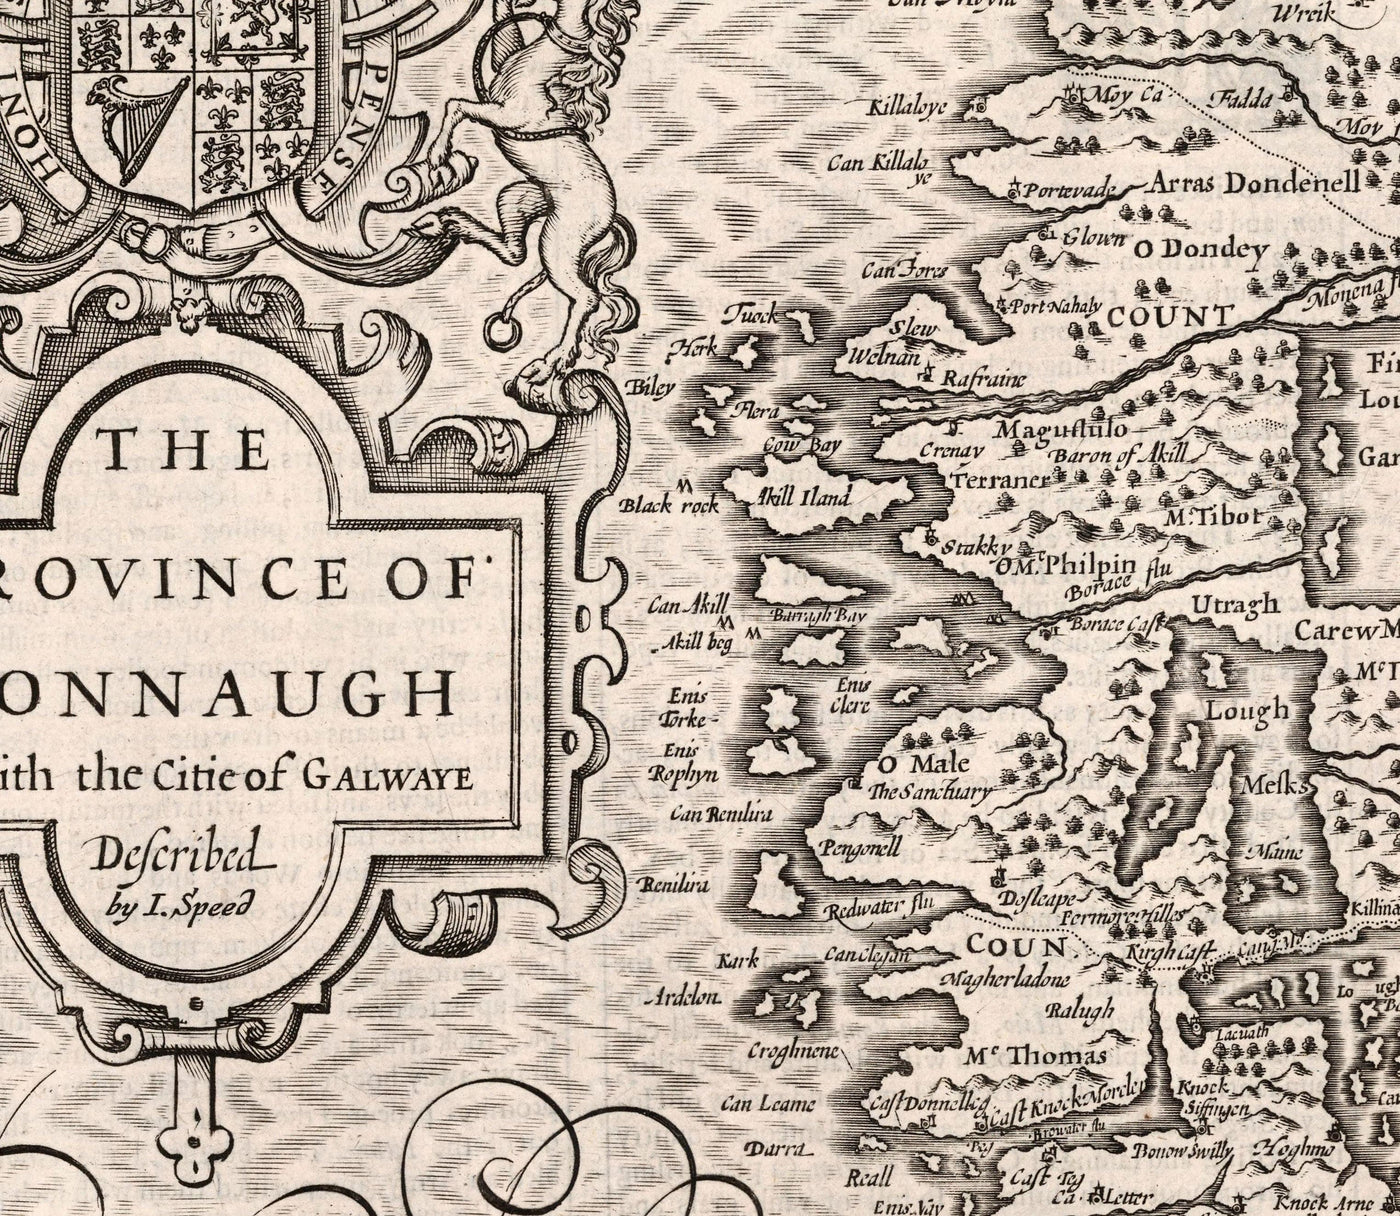 Old Monochrome Map of Connacht, Ireland 1611 by John Speed - Galway, Sligo, Mayo, Leitrim, Clare